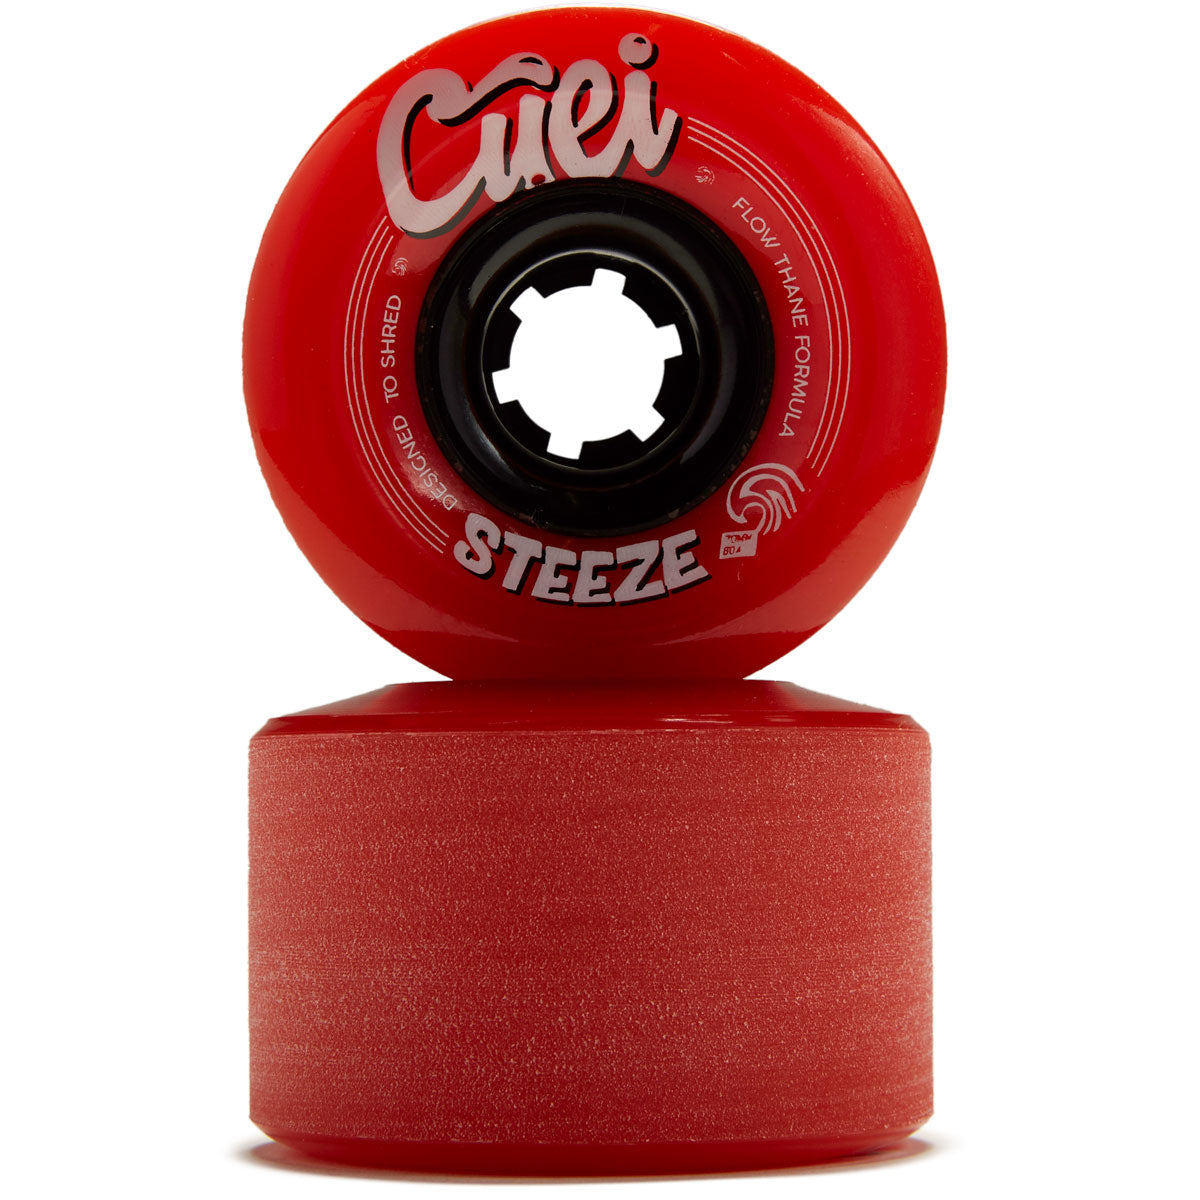 Cuei Steeze Freeride 80a Stoneground Longboard Wheels - Red - 70mm image 2